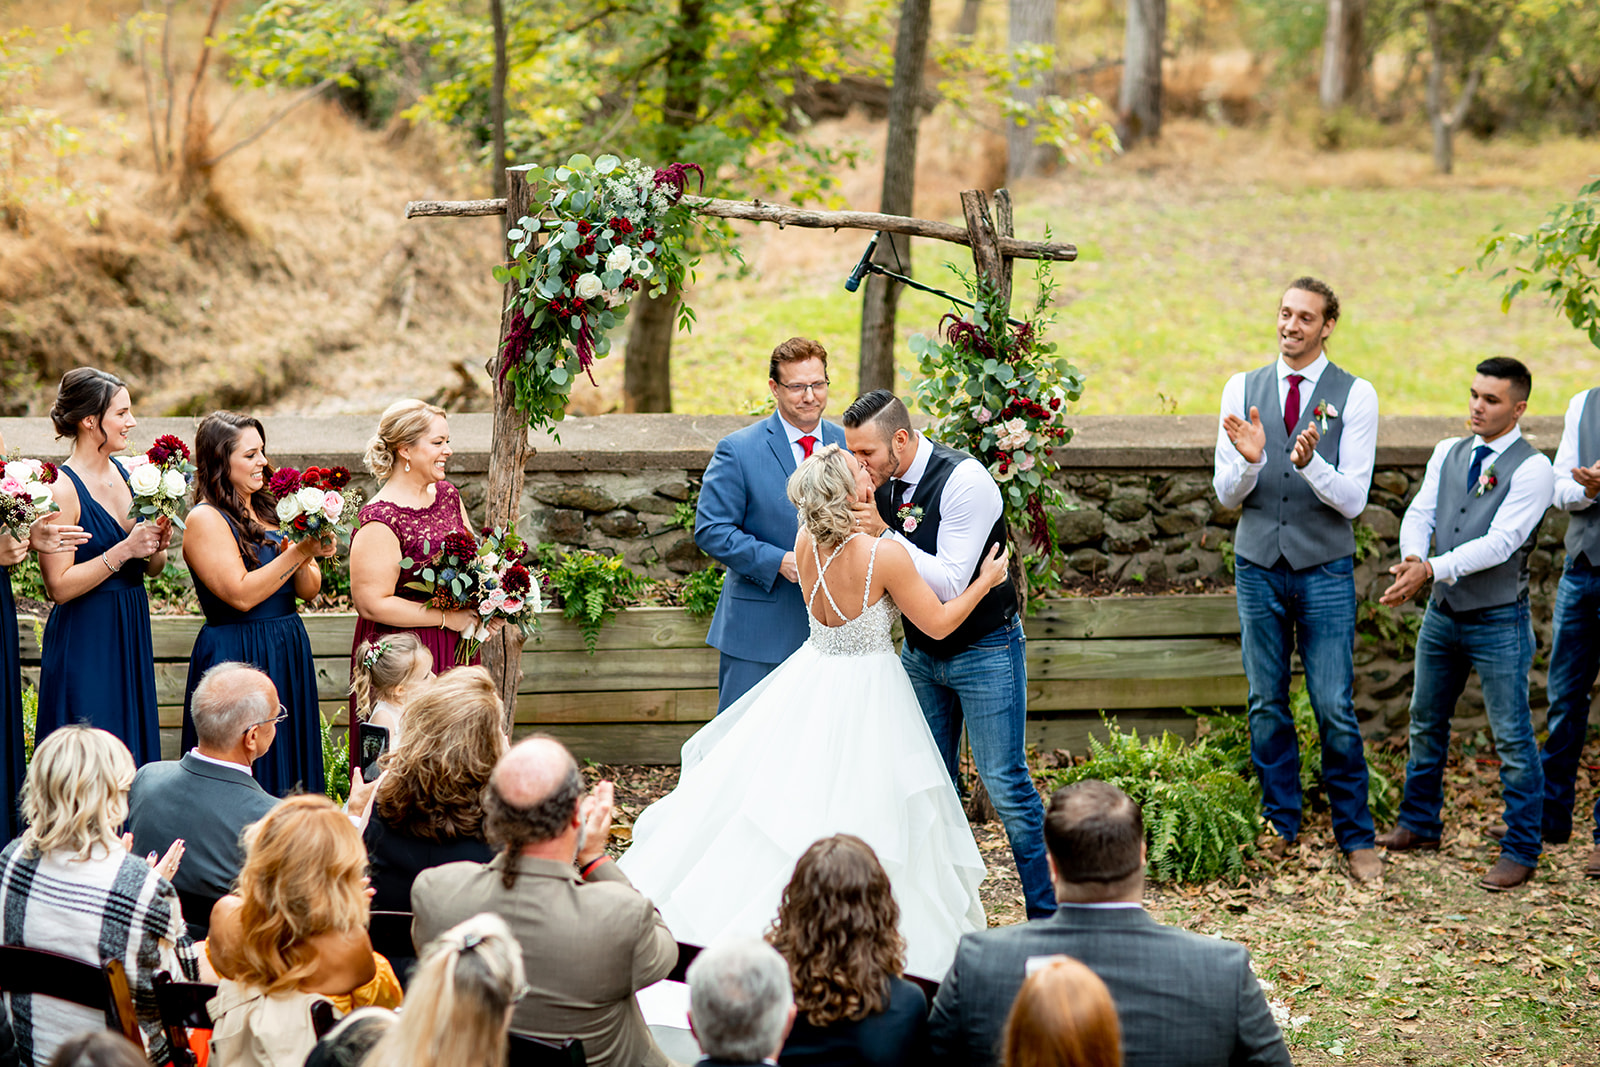 Kateland  Johns Wedding at Winding Creek Farm - Image Property of www.j-dphoto.com